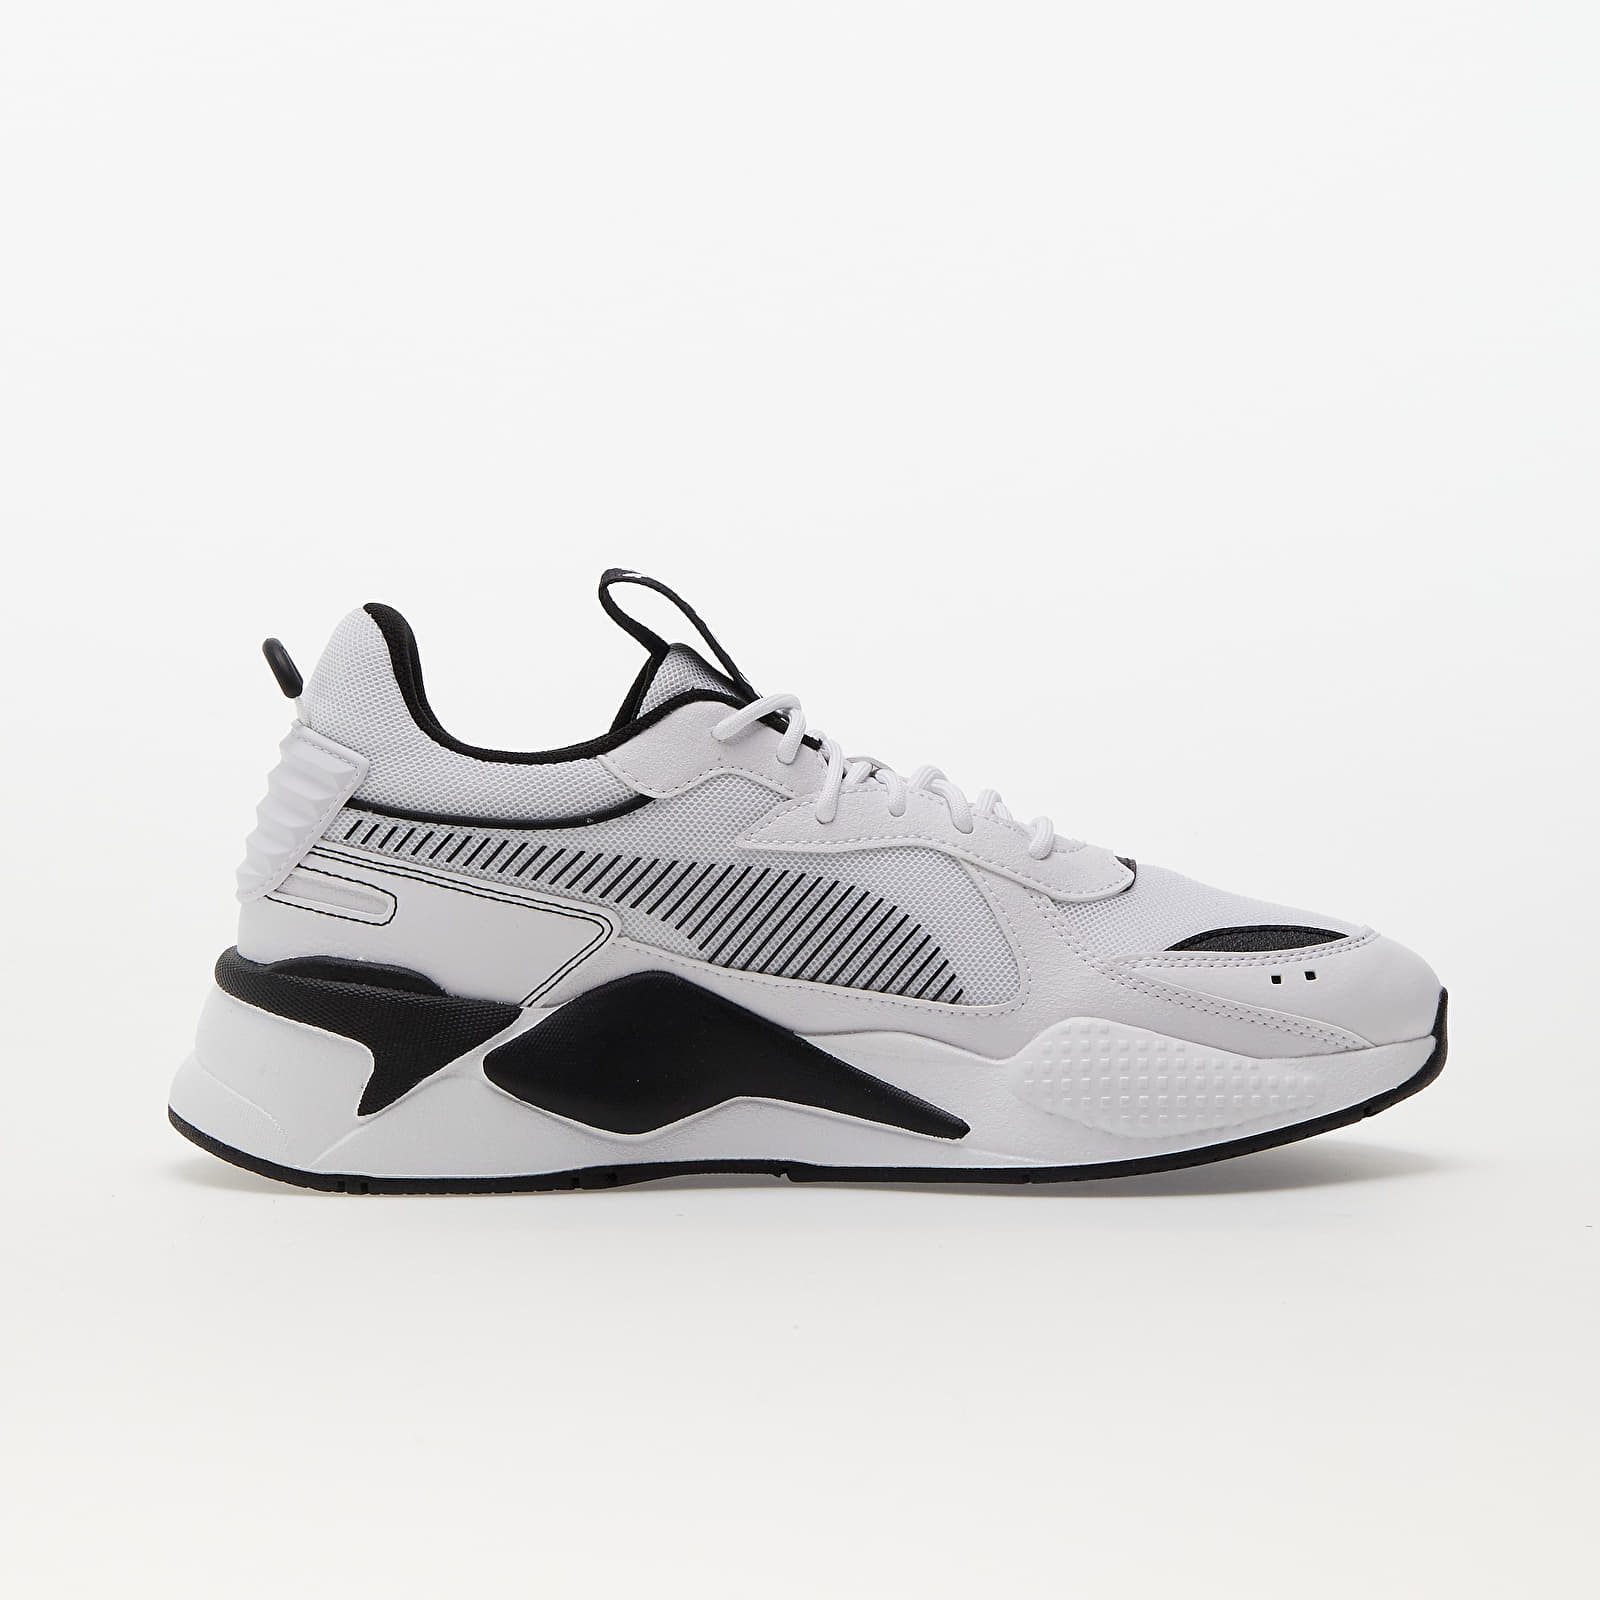 Chaussures et baskets homme Puma RS-X B&W Puma White-Puma Black | Footshop